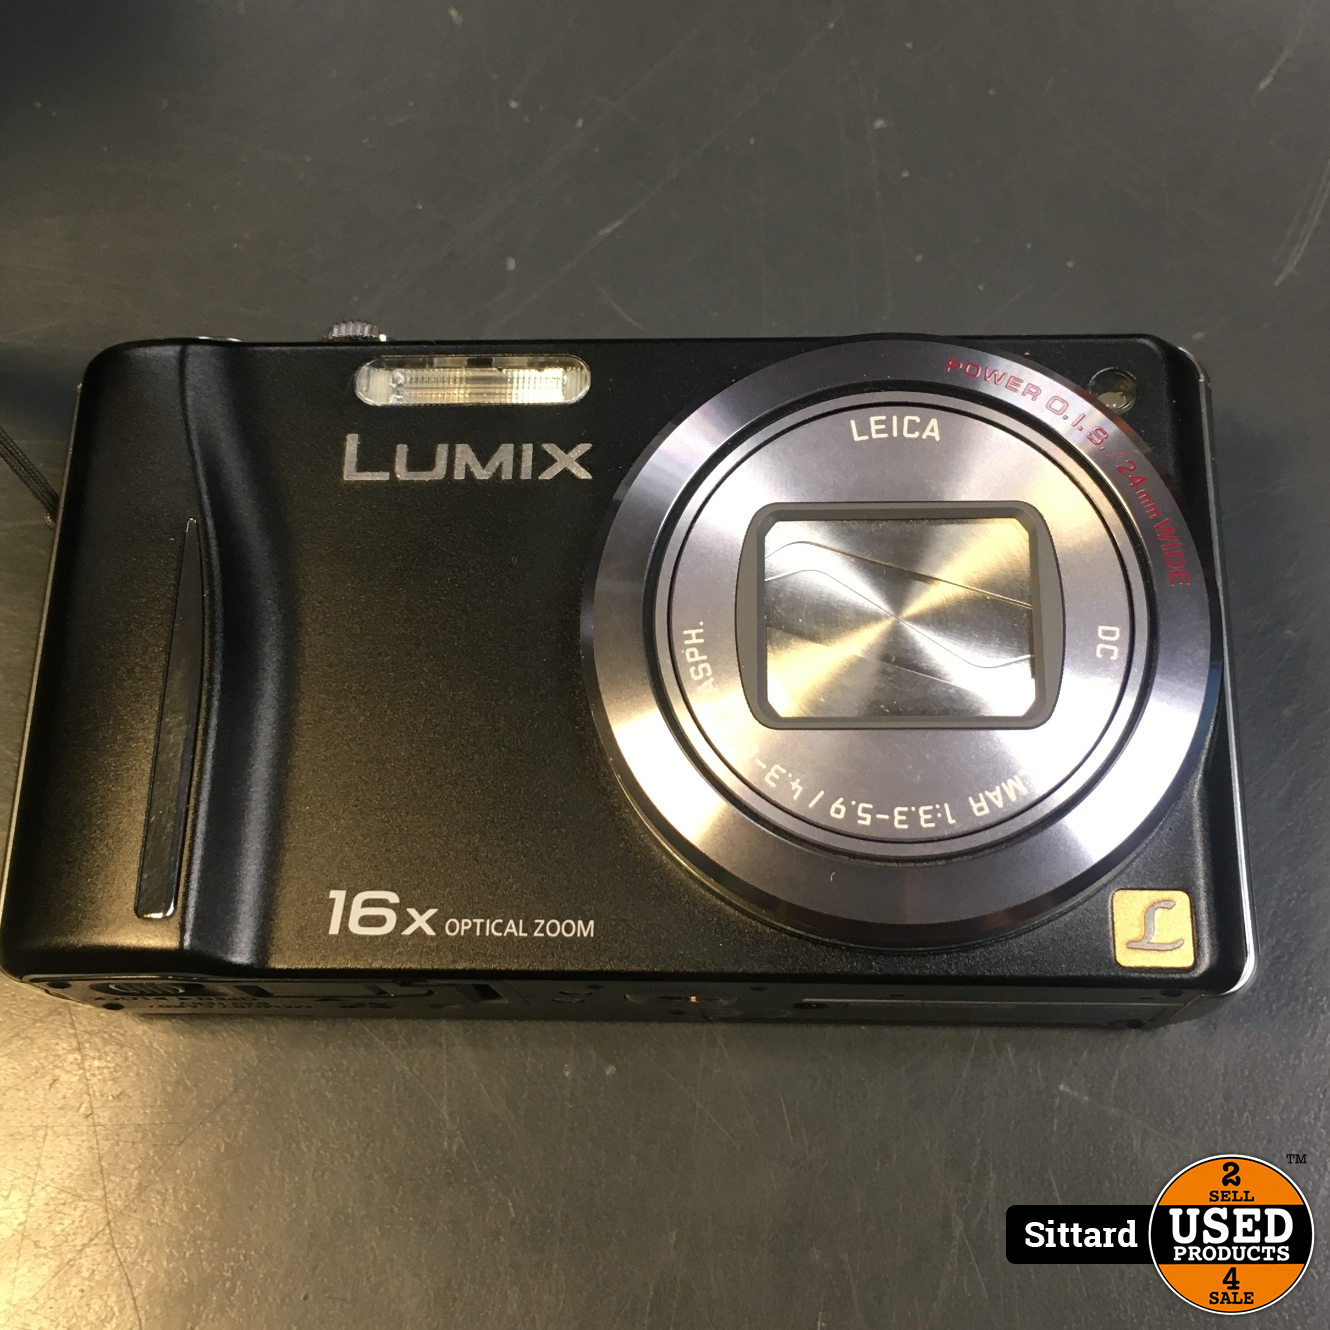 Absoluut Verlichten Kracht Panasonic LUMIX TZ18 compactcamera, 14,1Mp, 16x zoom, LEICA lens | nwpr 210  euro - Used Products Sittard